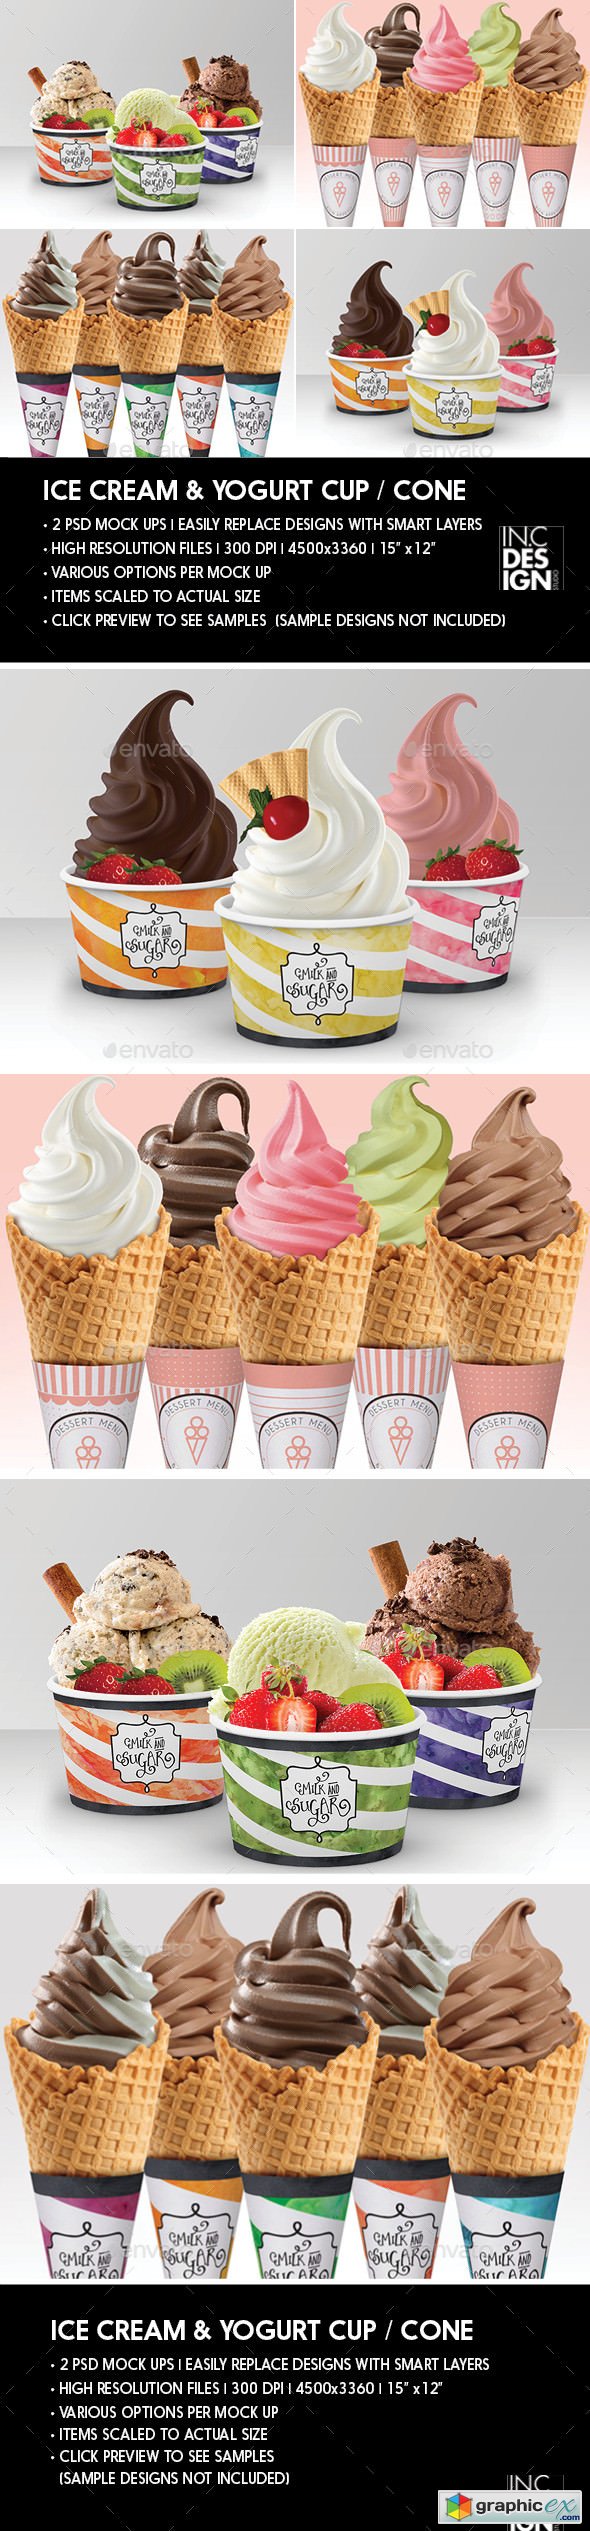 Packaging Mock Up Ice Cream / Yogurt Cup / Cone